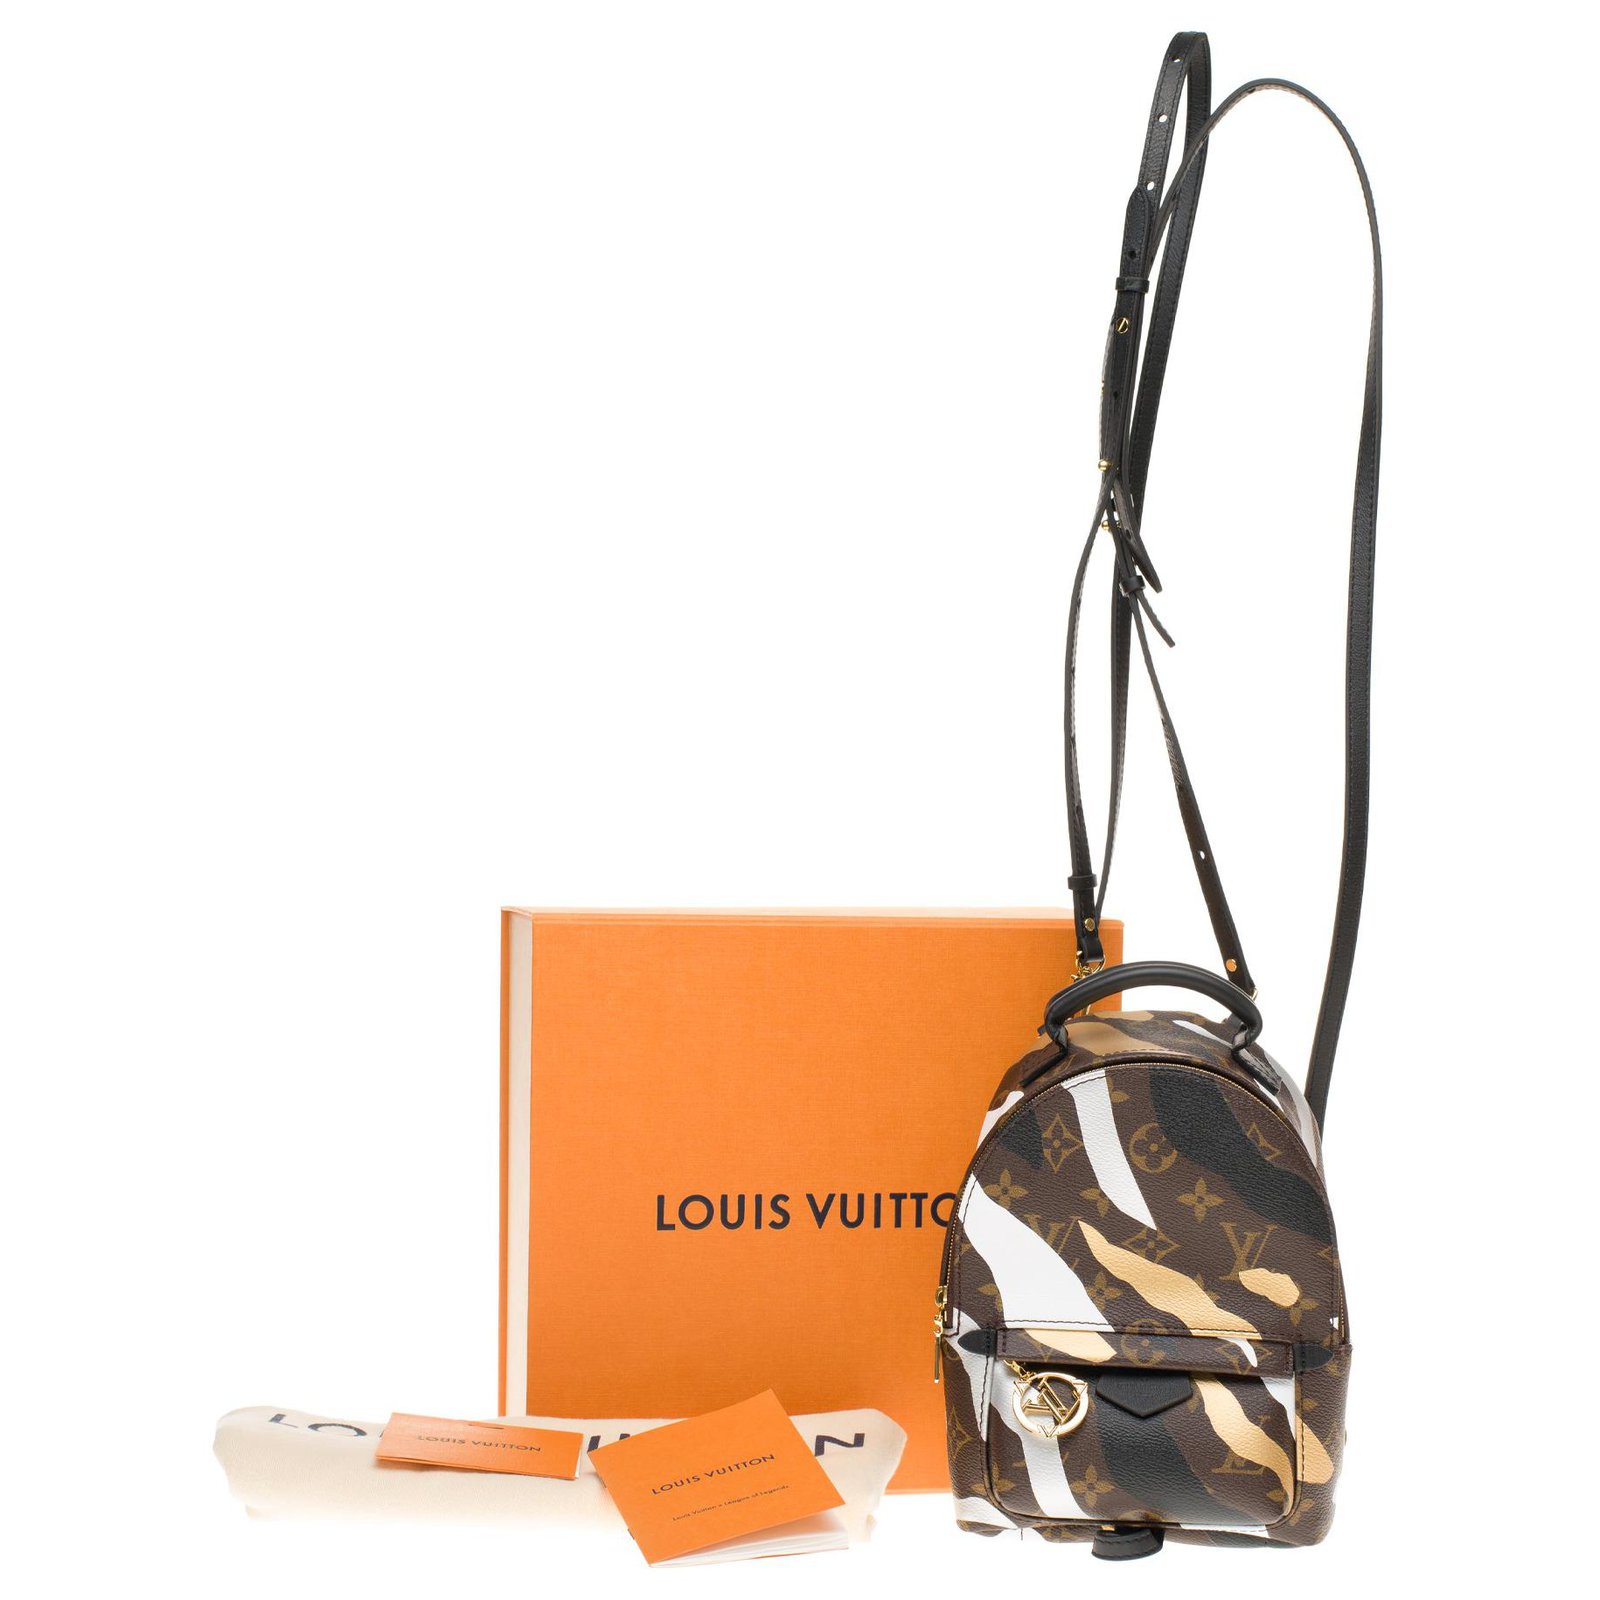 LOUIS VUITTON PALM SPRINGS MINI - New 2020 Version! Is the zipper